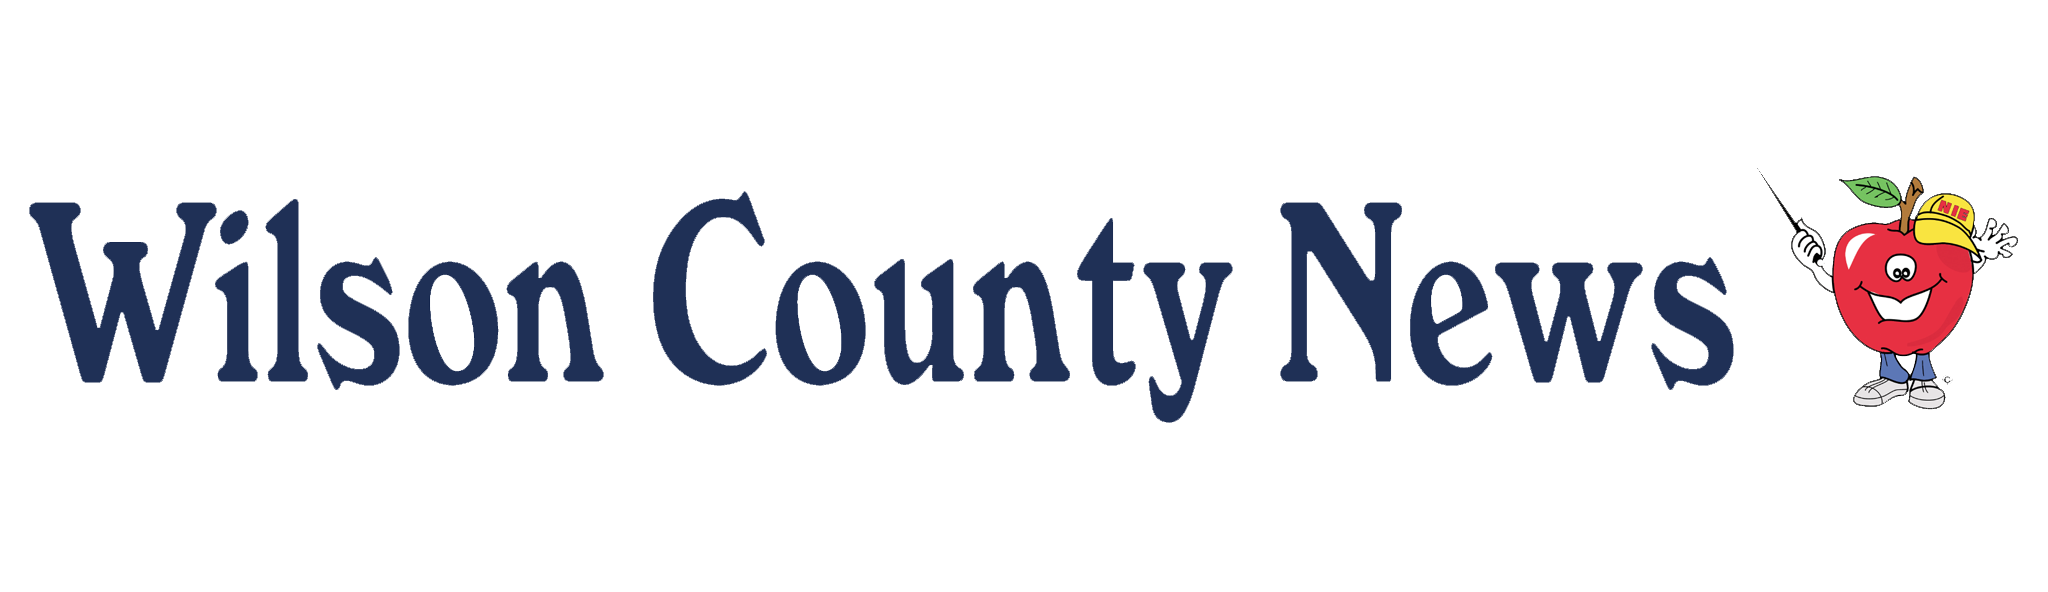 Wilson County News